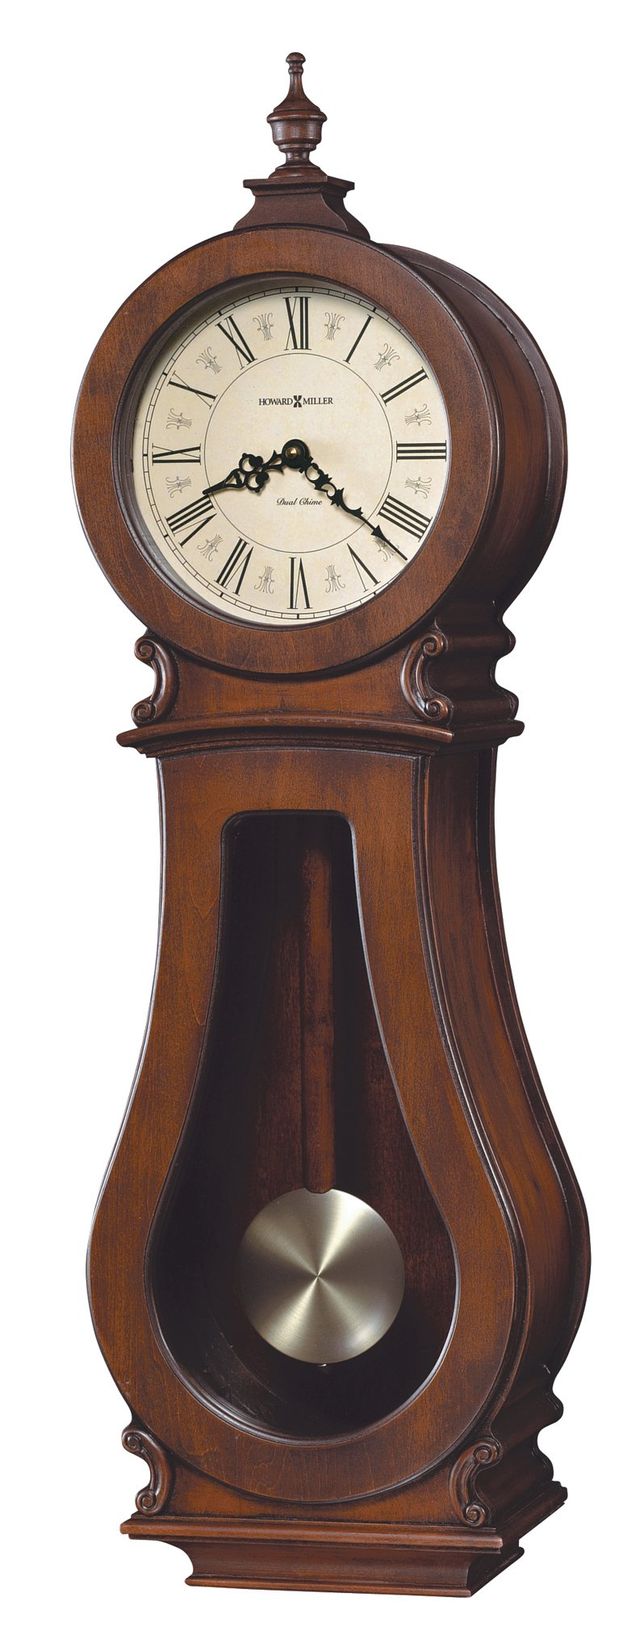 Howard Miller Malia Wall Clock 625-466